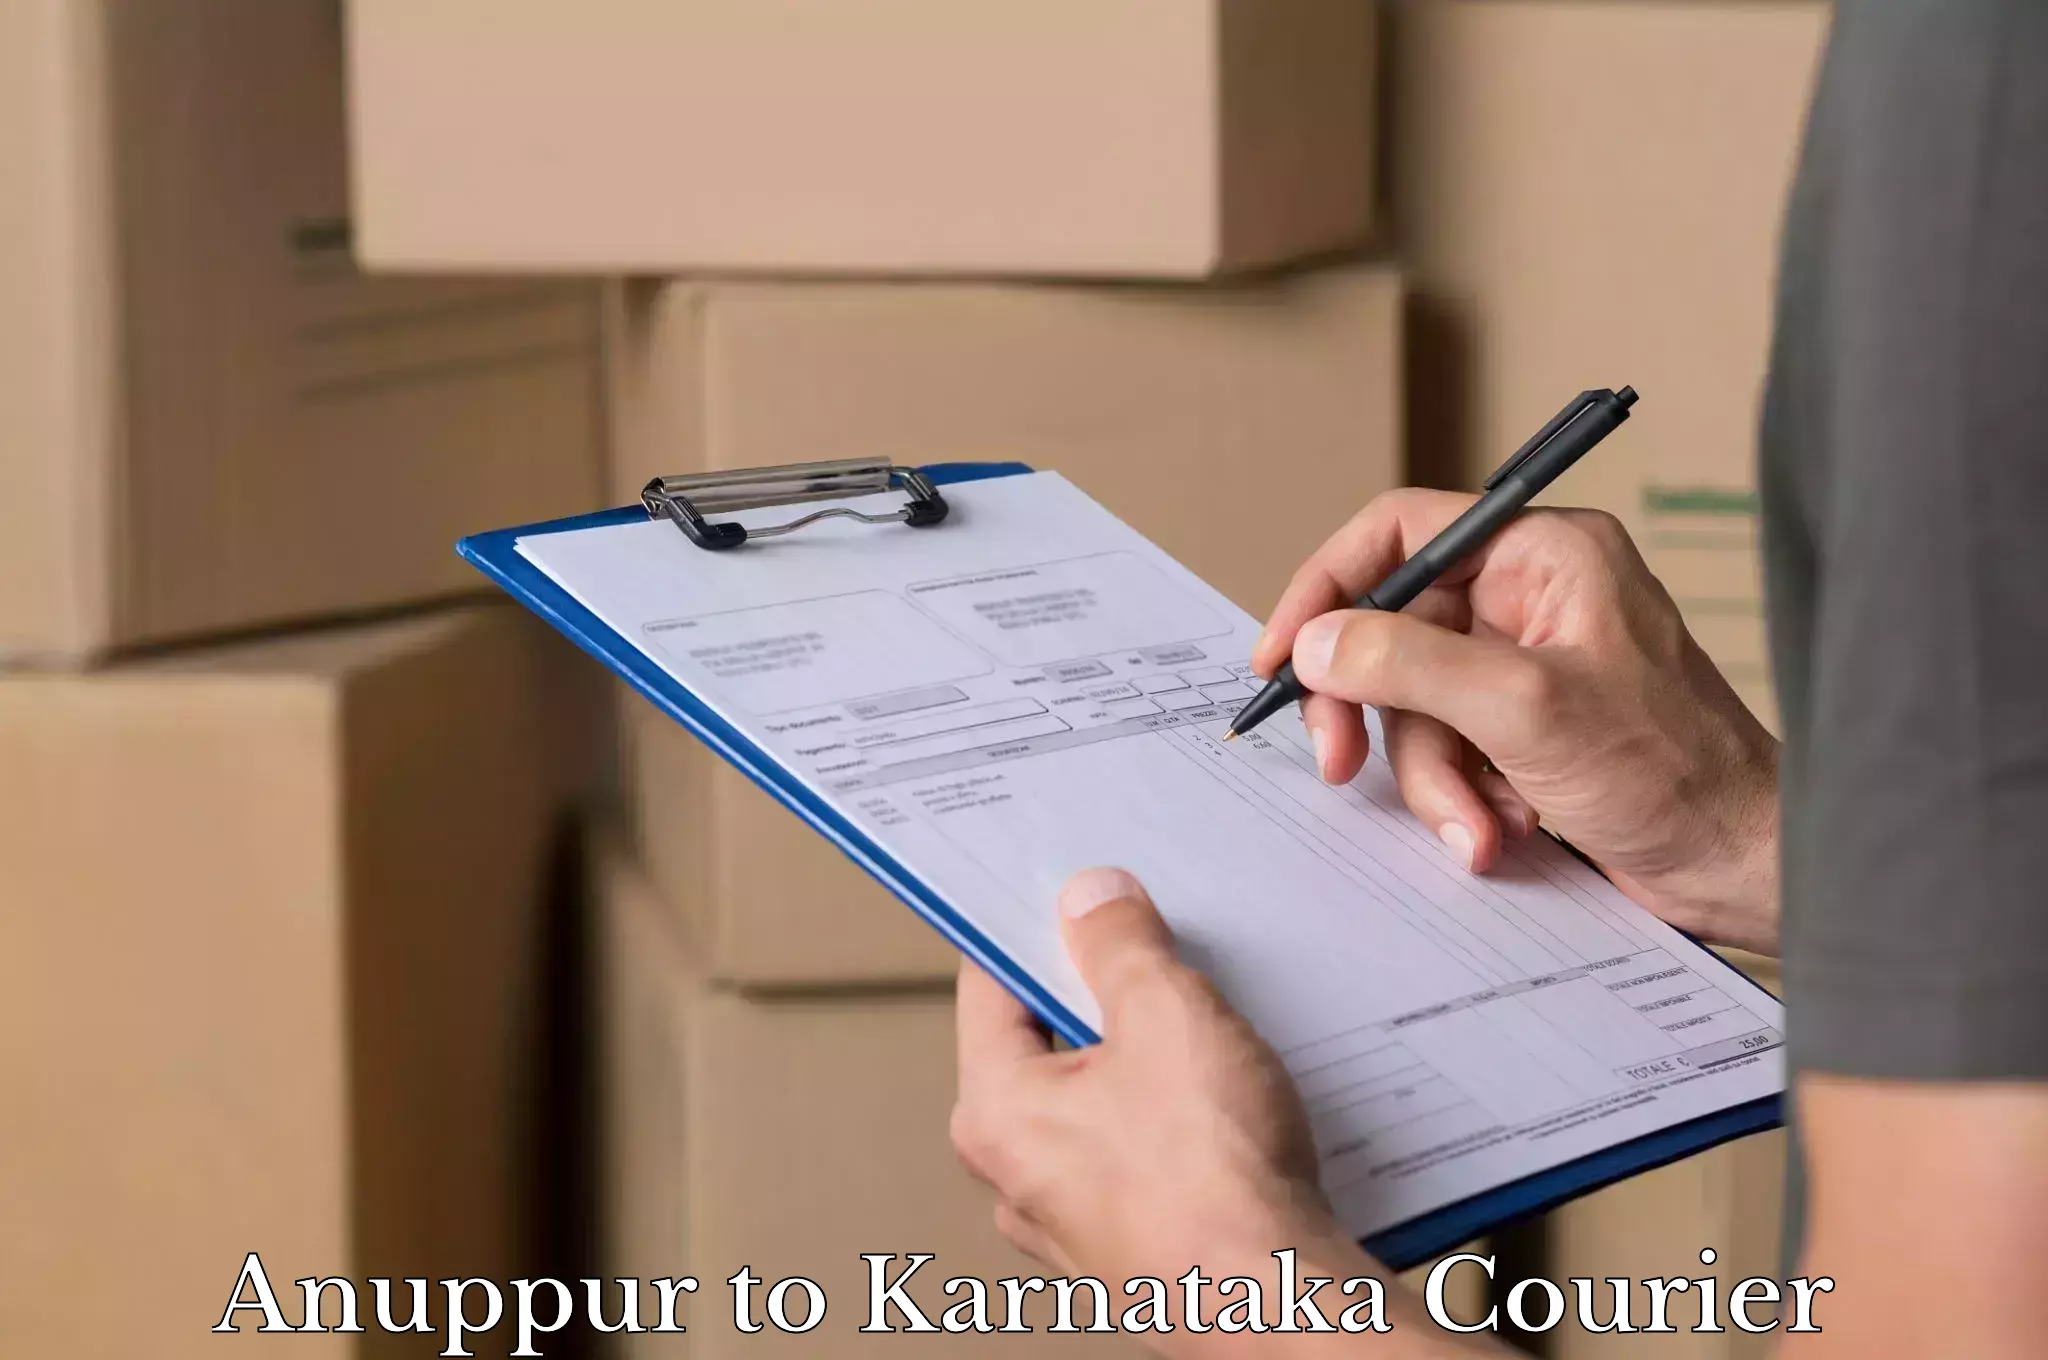 Baggage relocation service Anuppur to Karwar